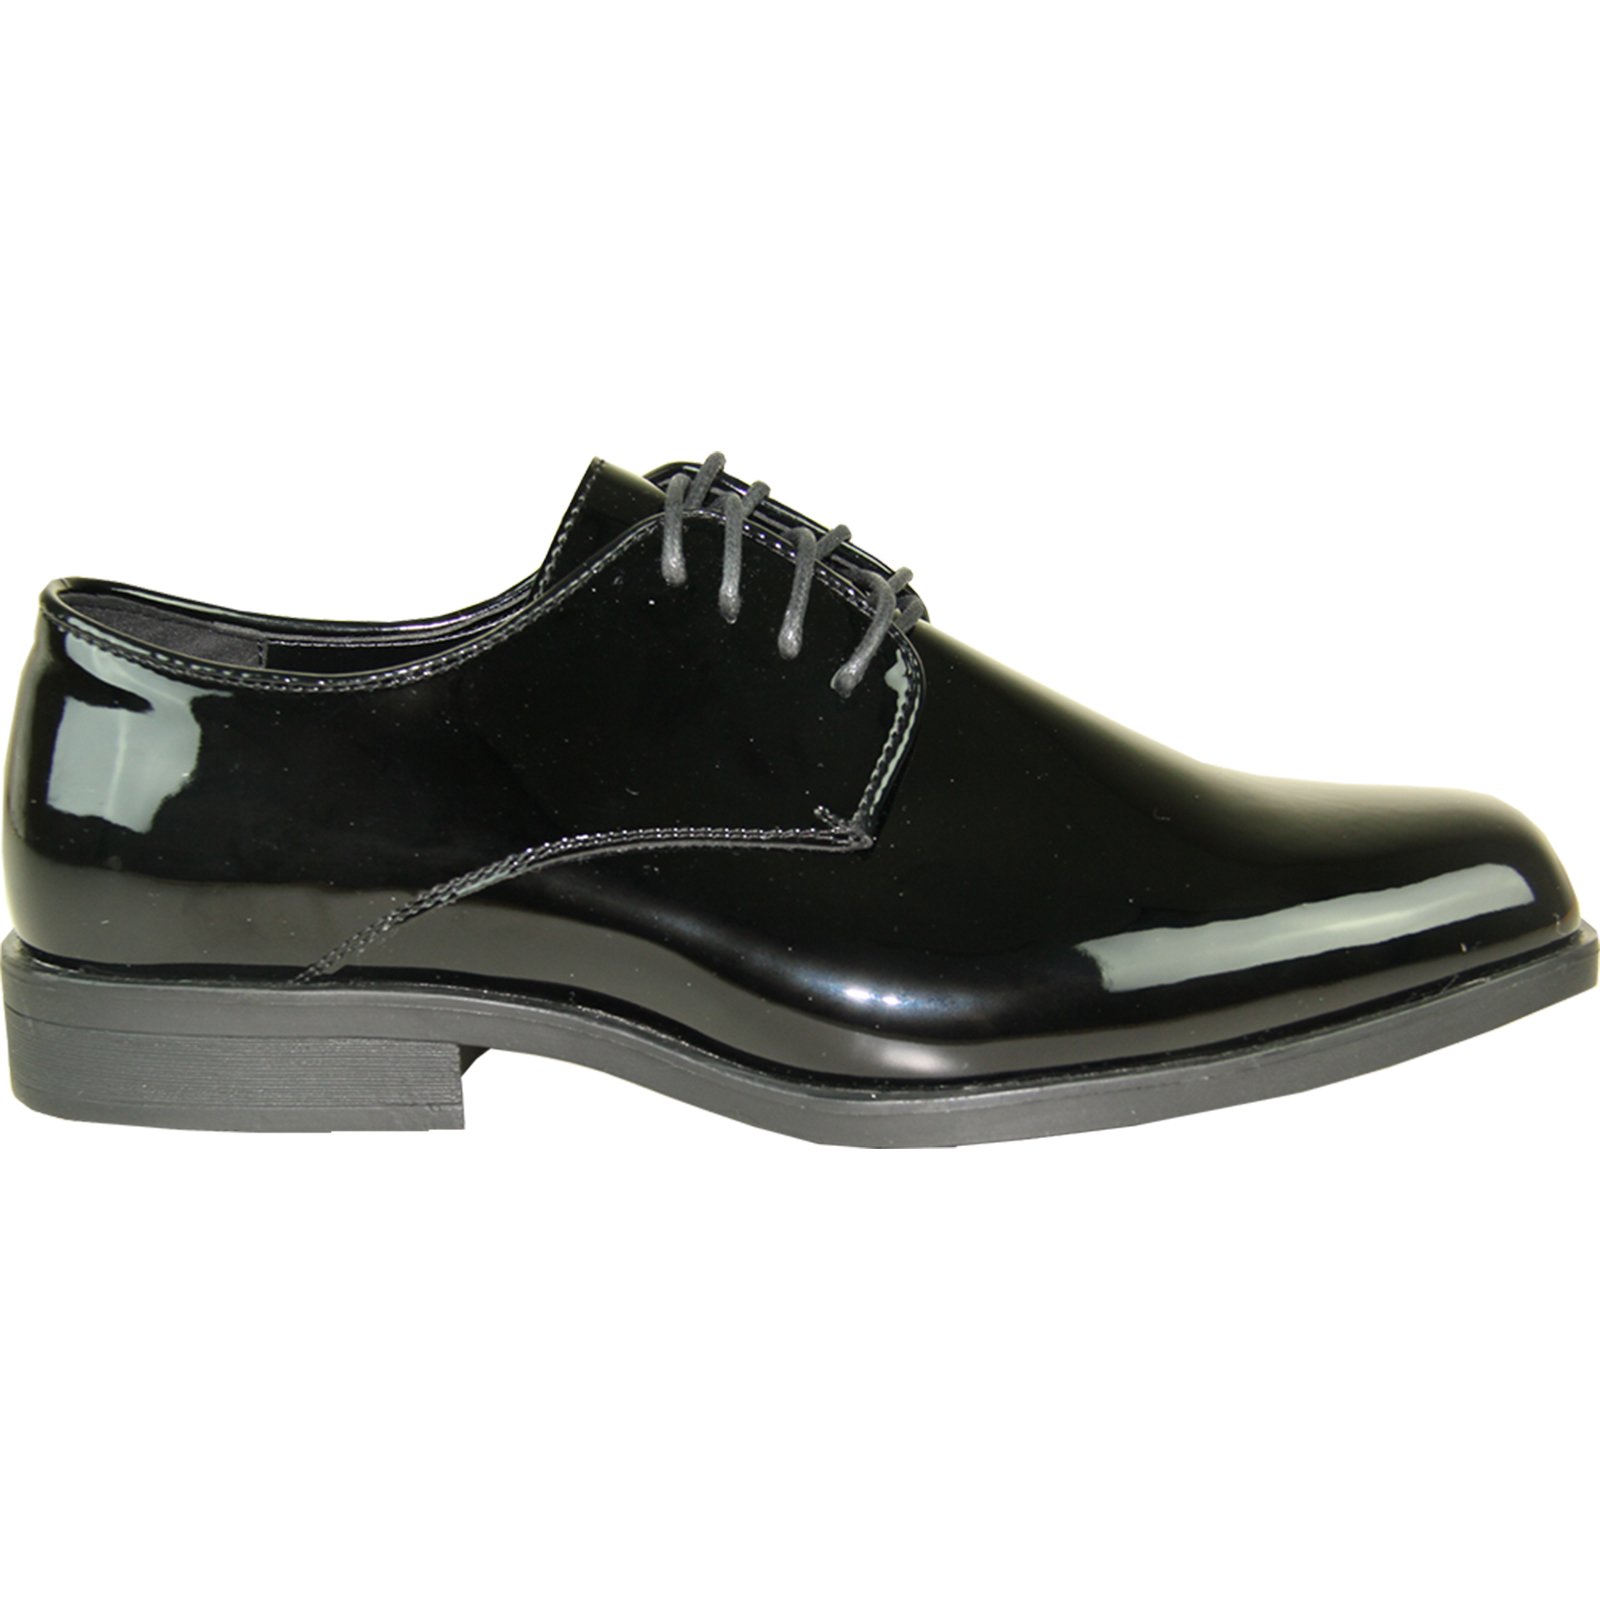 VANGELO Men Oxford Dress Shoe Formal Tuxedo Shoe for Wedding, Uniform and Prom -Wide Width Available